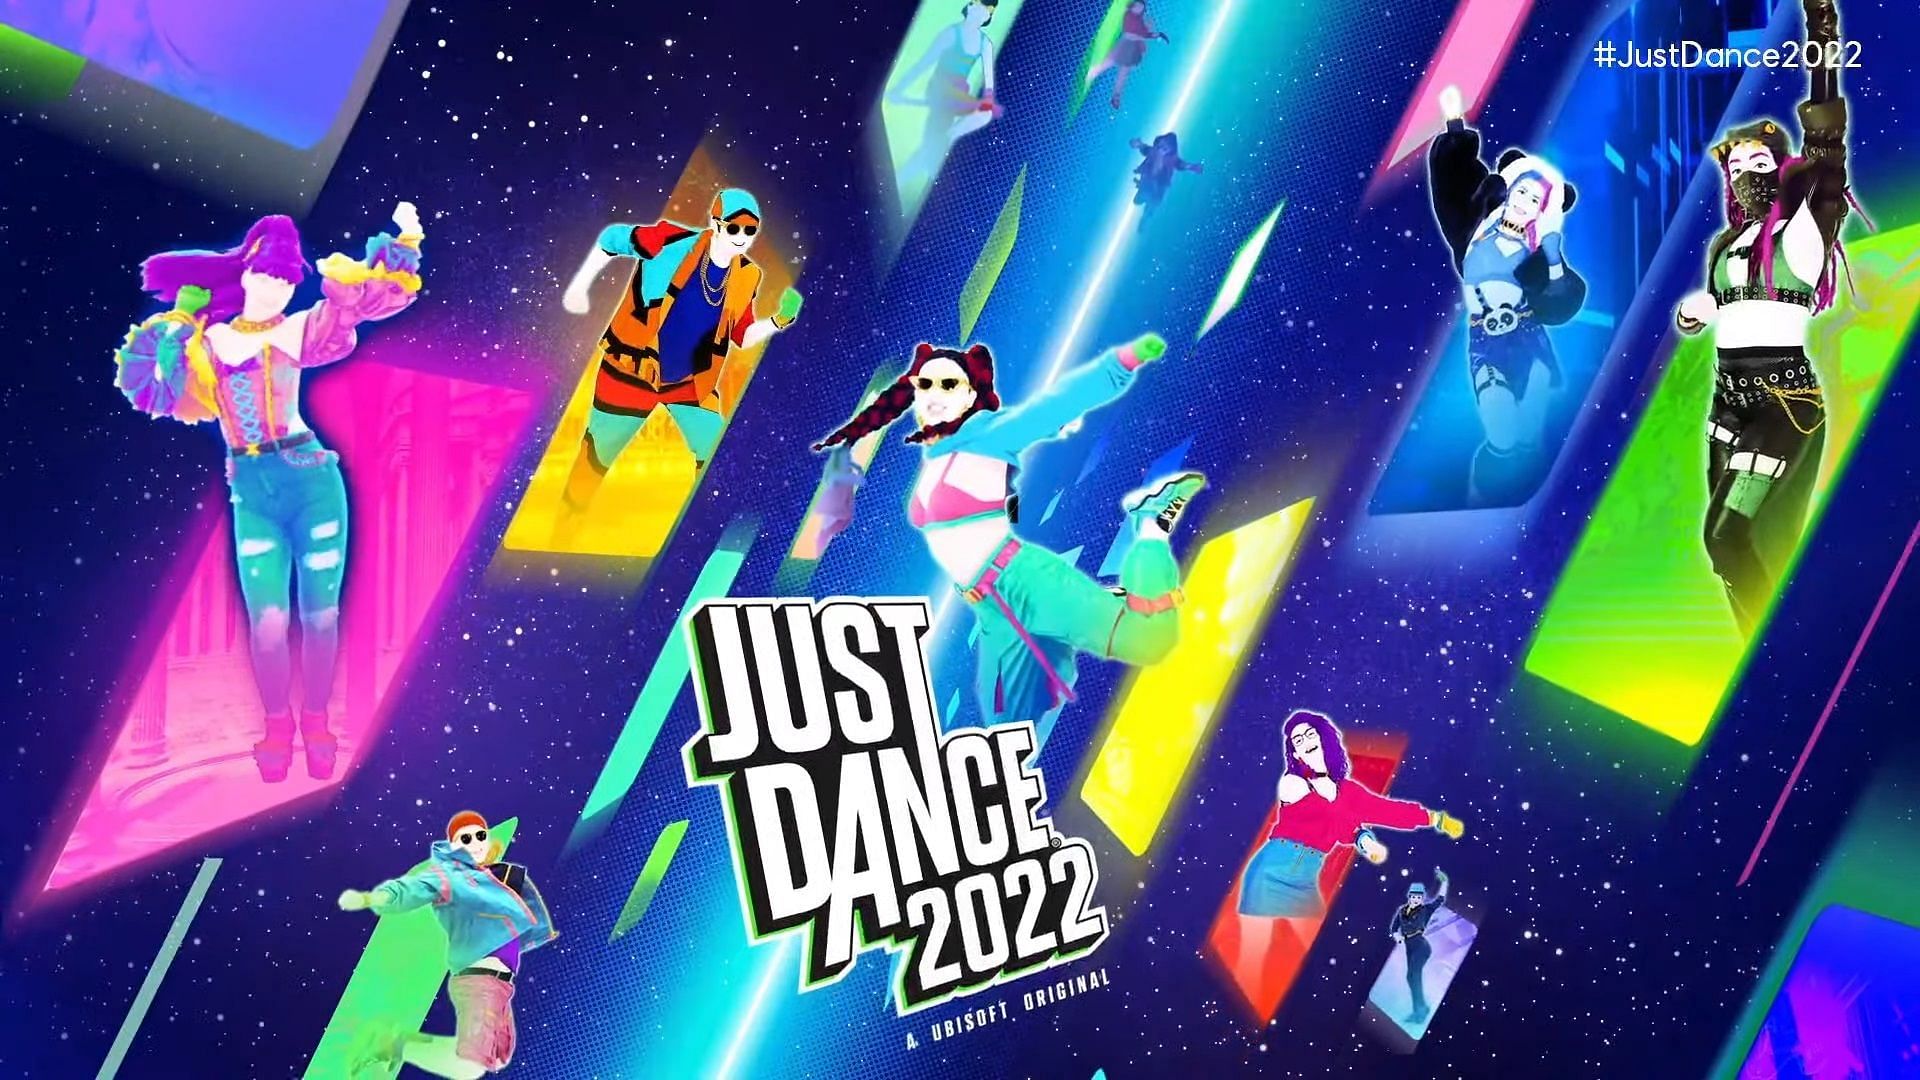 A promotional image for Just Dance 2022 (Image via Ubisoft)